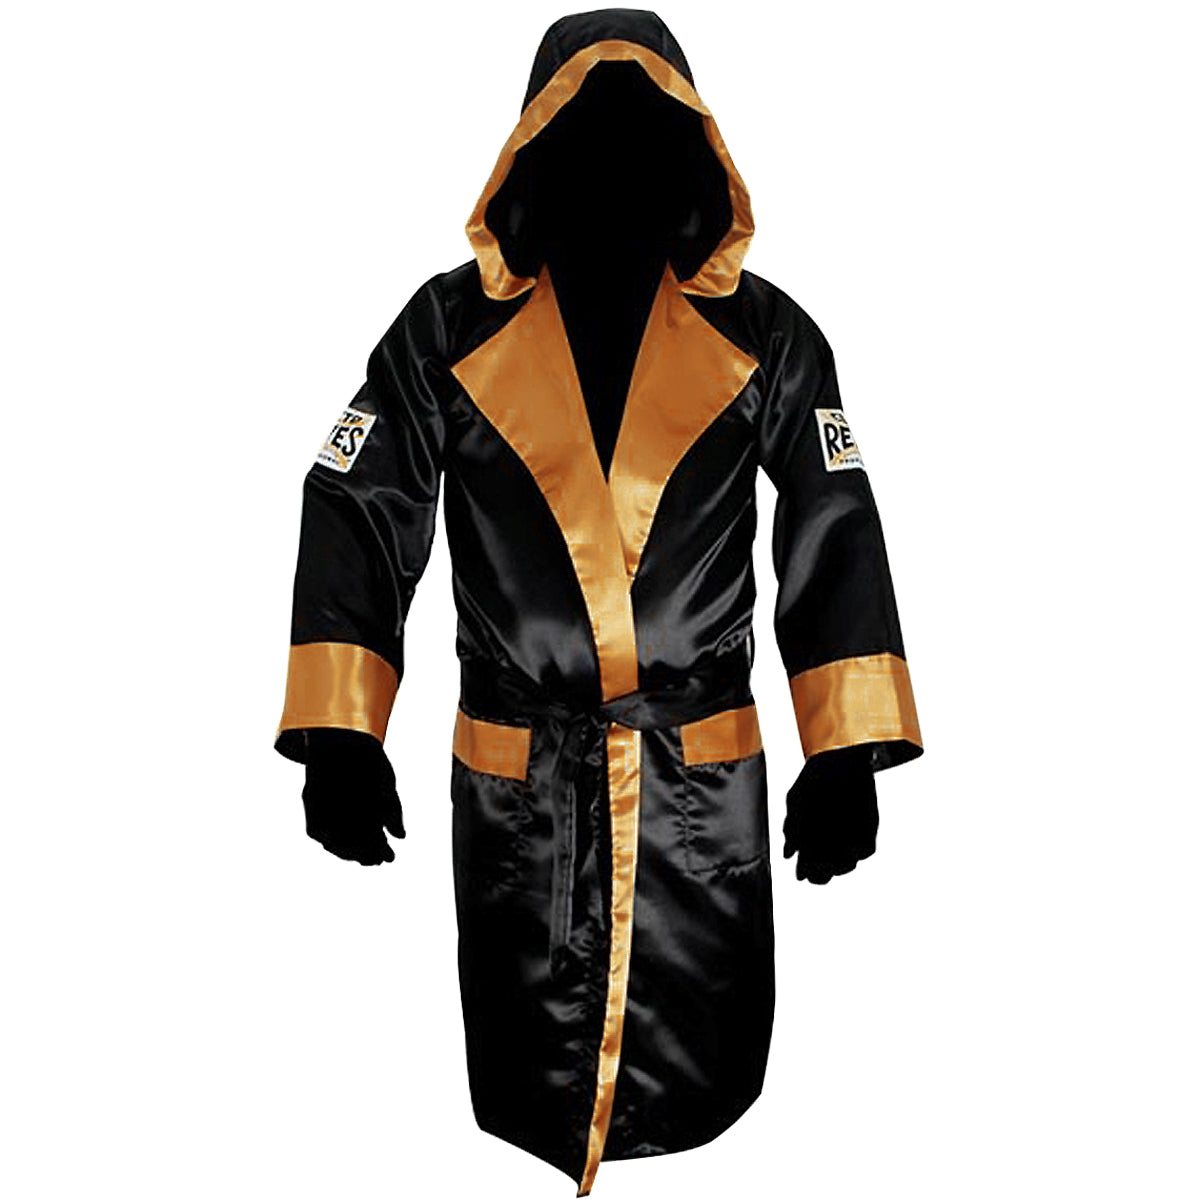 Cleto Reyes Satin Boxing Robe with Hood - Small - Black/Gold Cleto Reyes